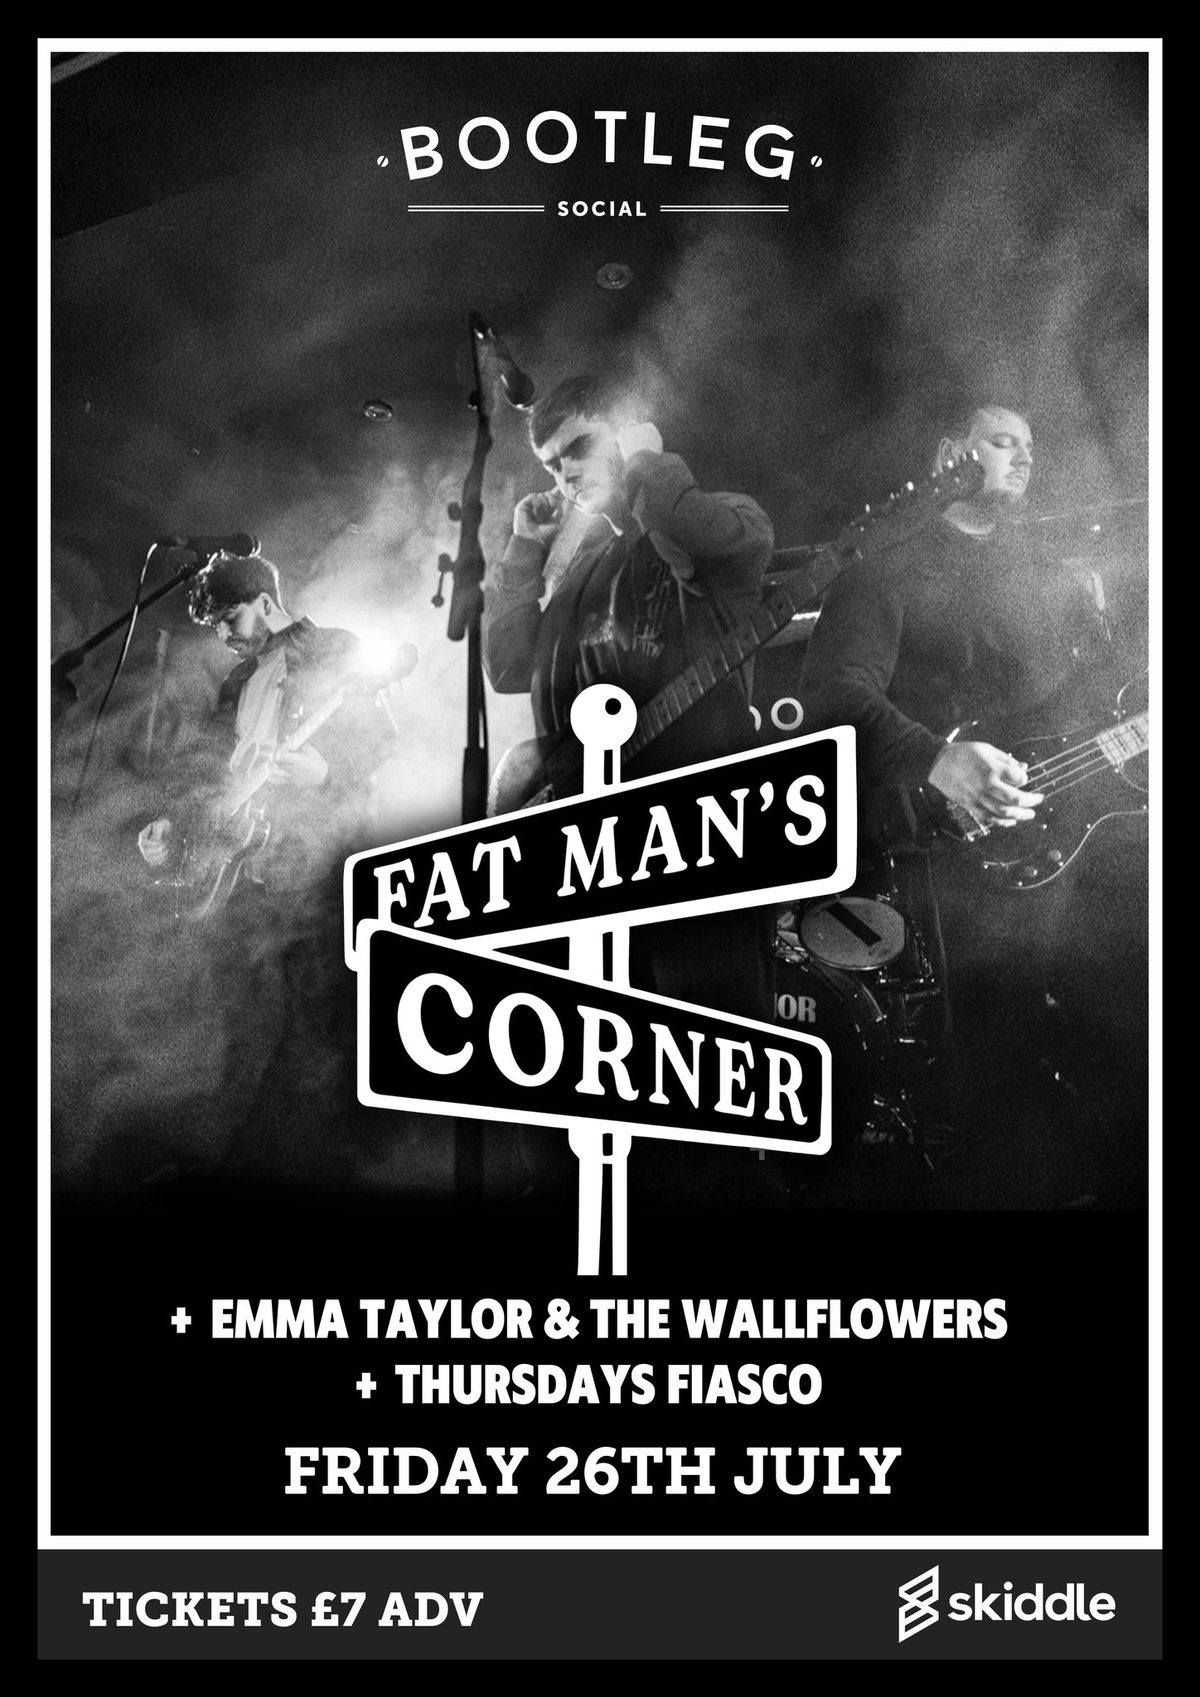 Fat Man\u2019s Corner, Emma Taylor & The Wallflowers, Thursdays Fiasco at Bootleg Social, Blackpool